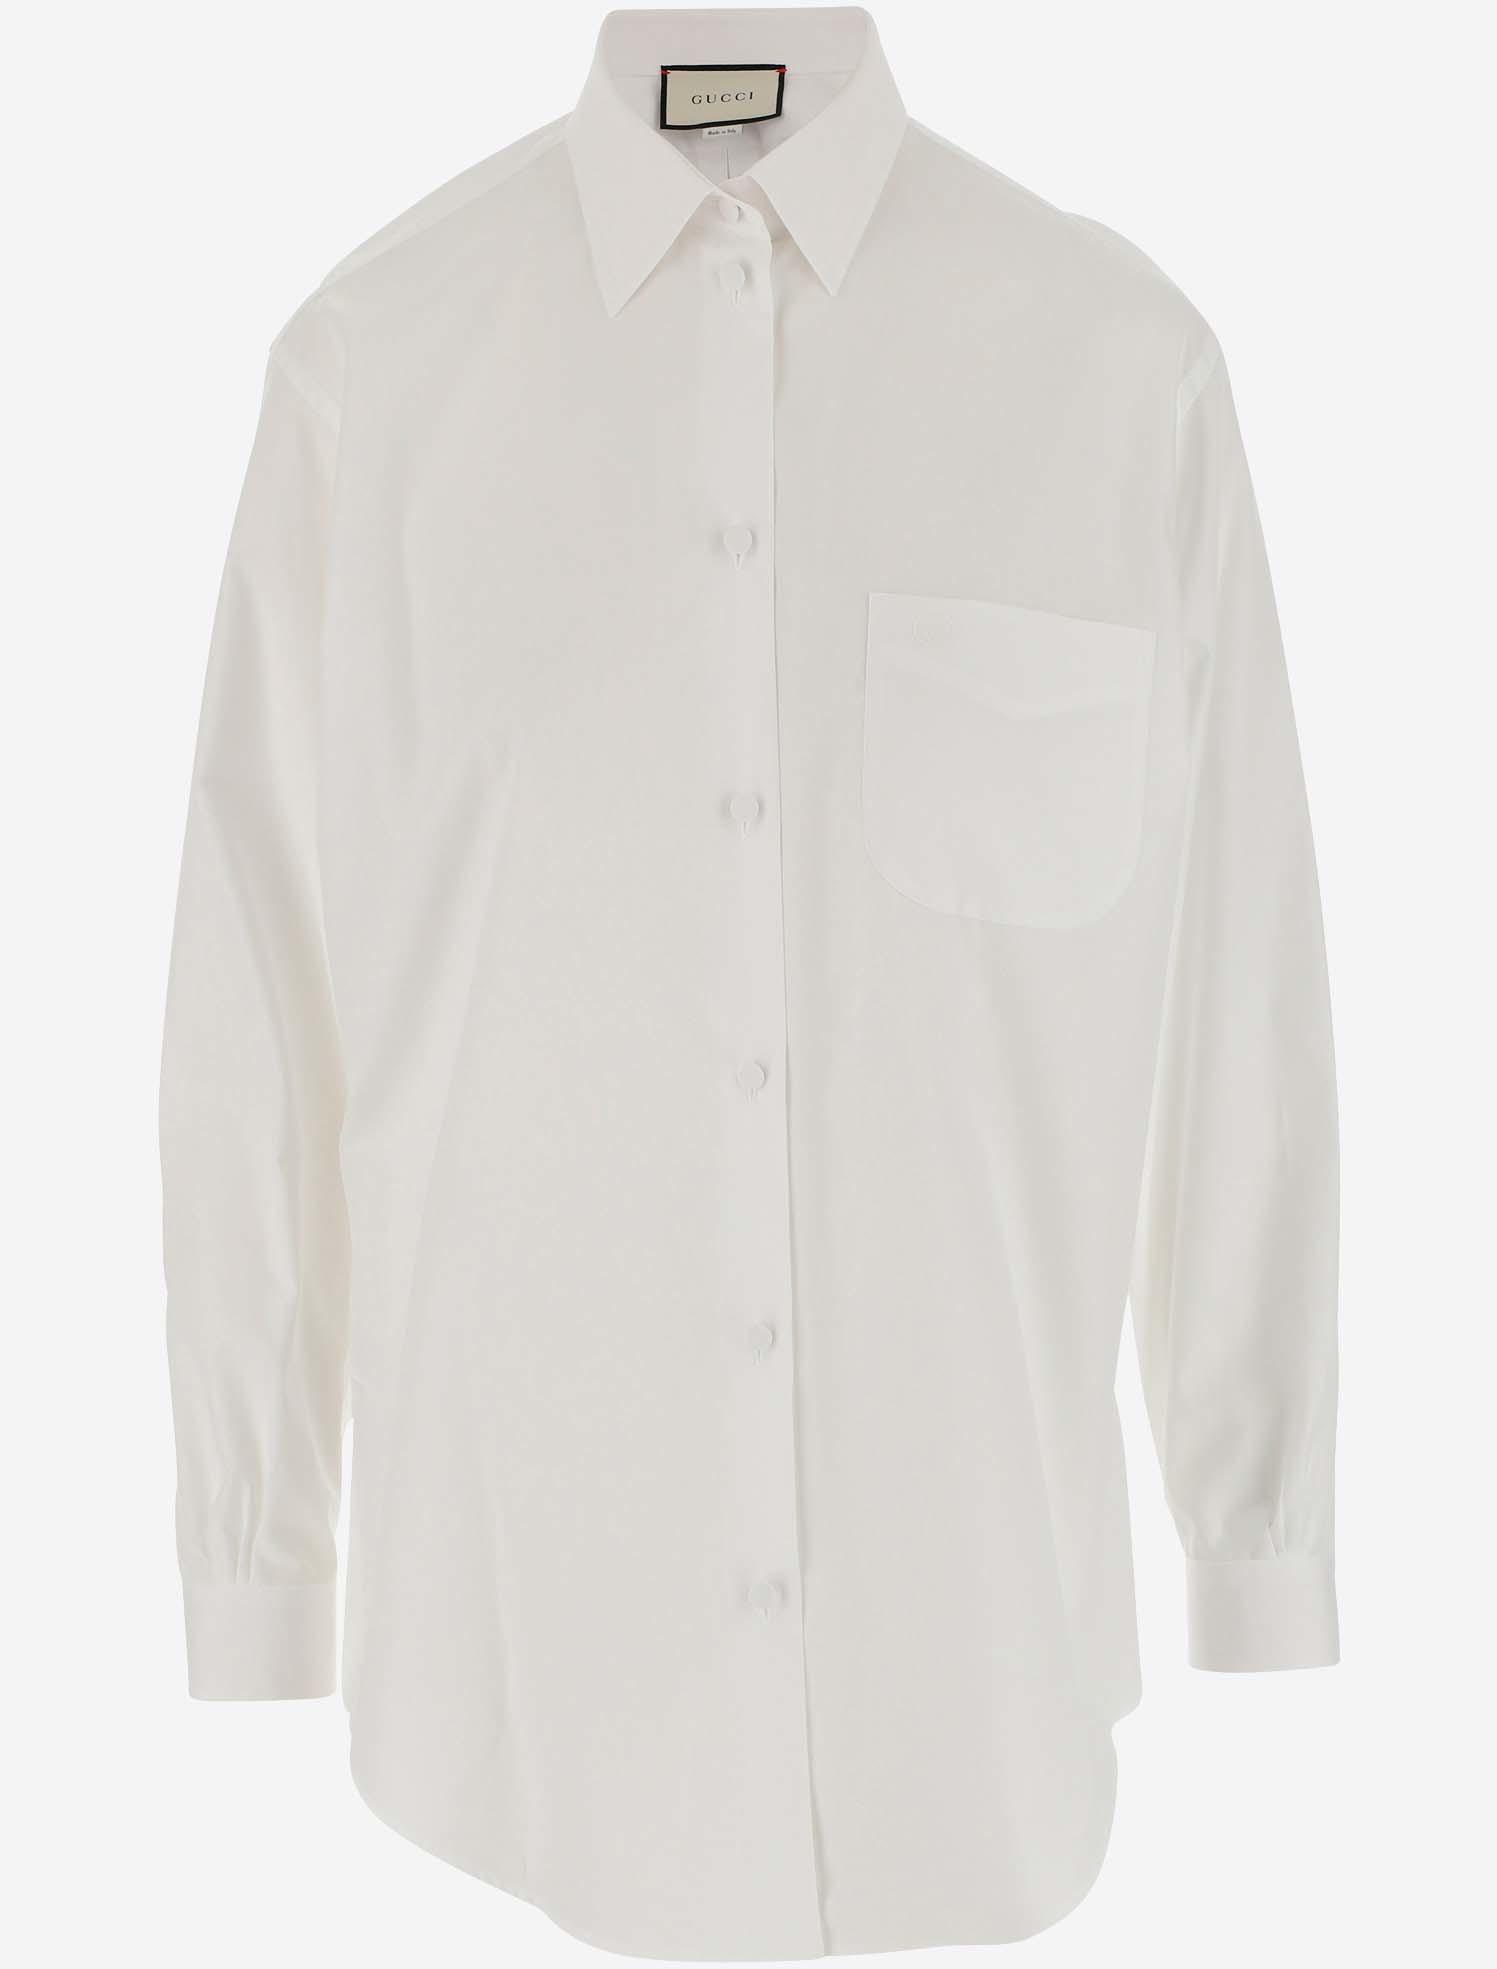 White Oversized cotton-poplin shirt, Gucci